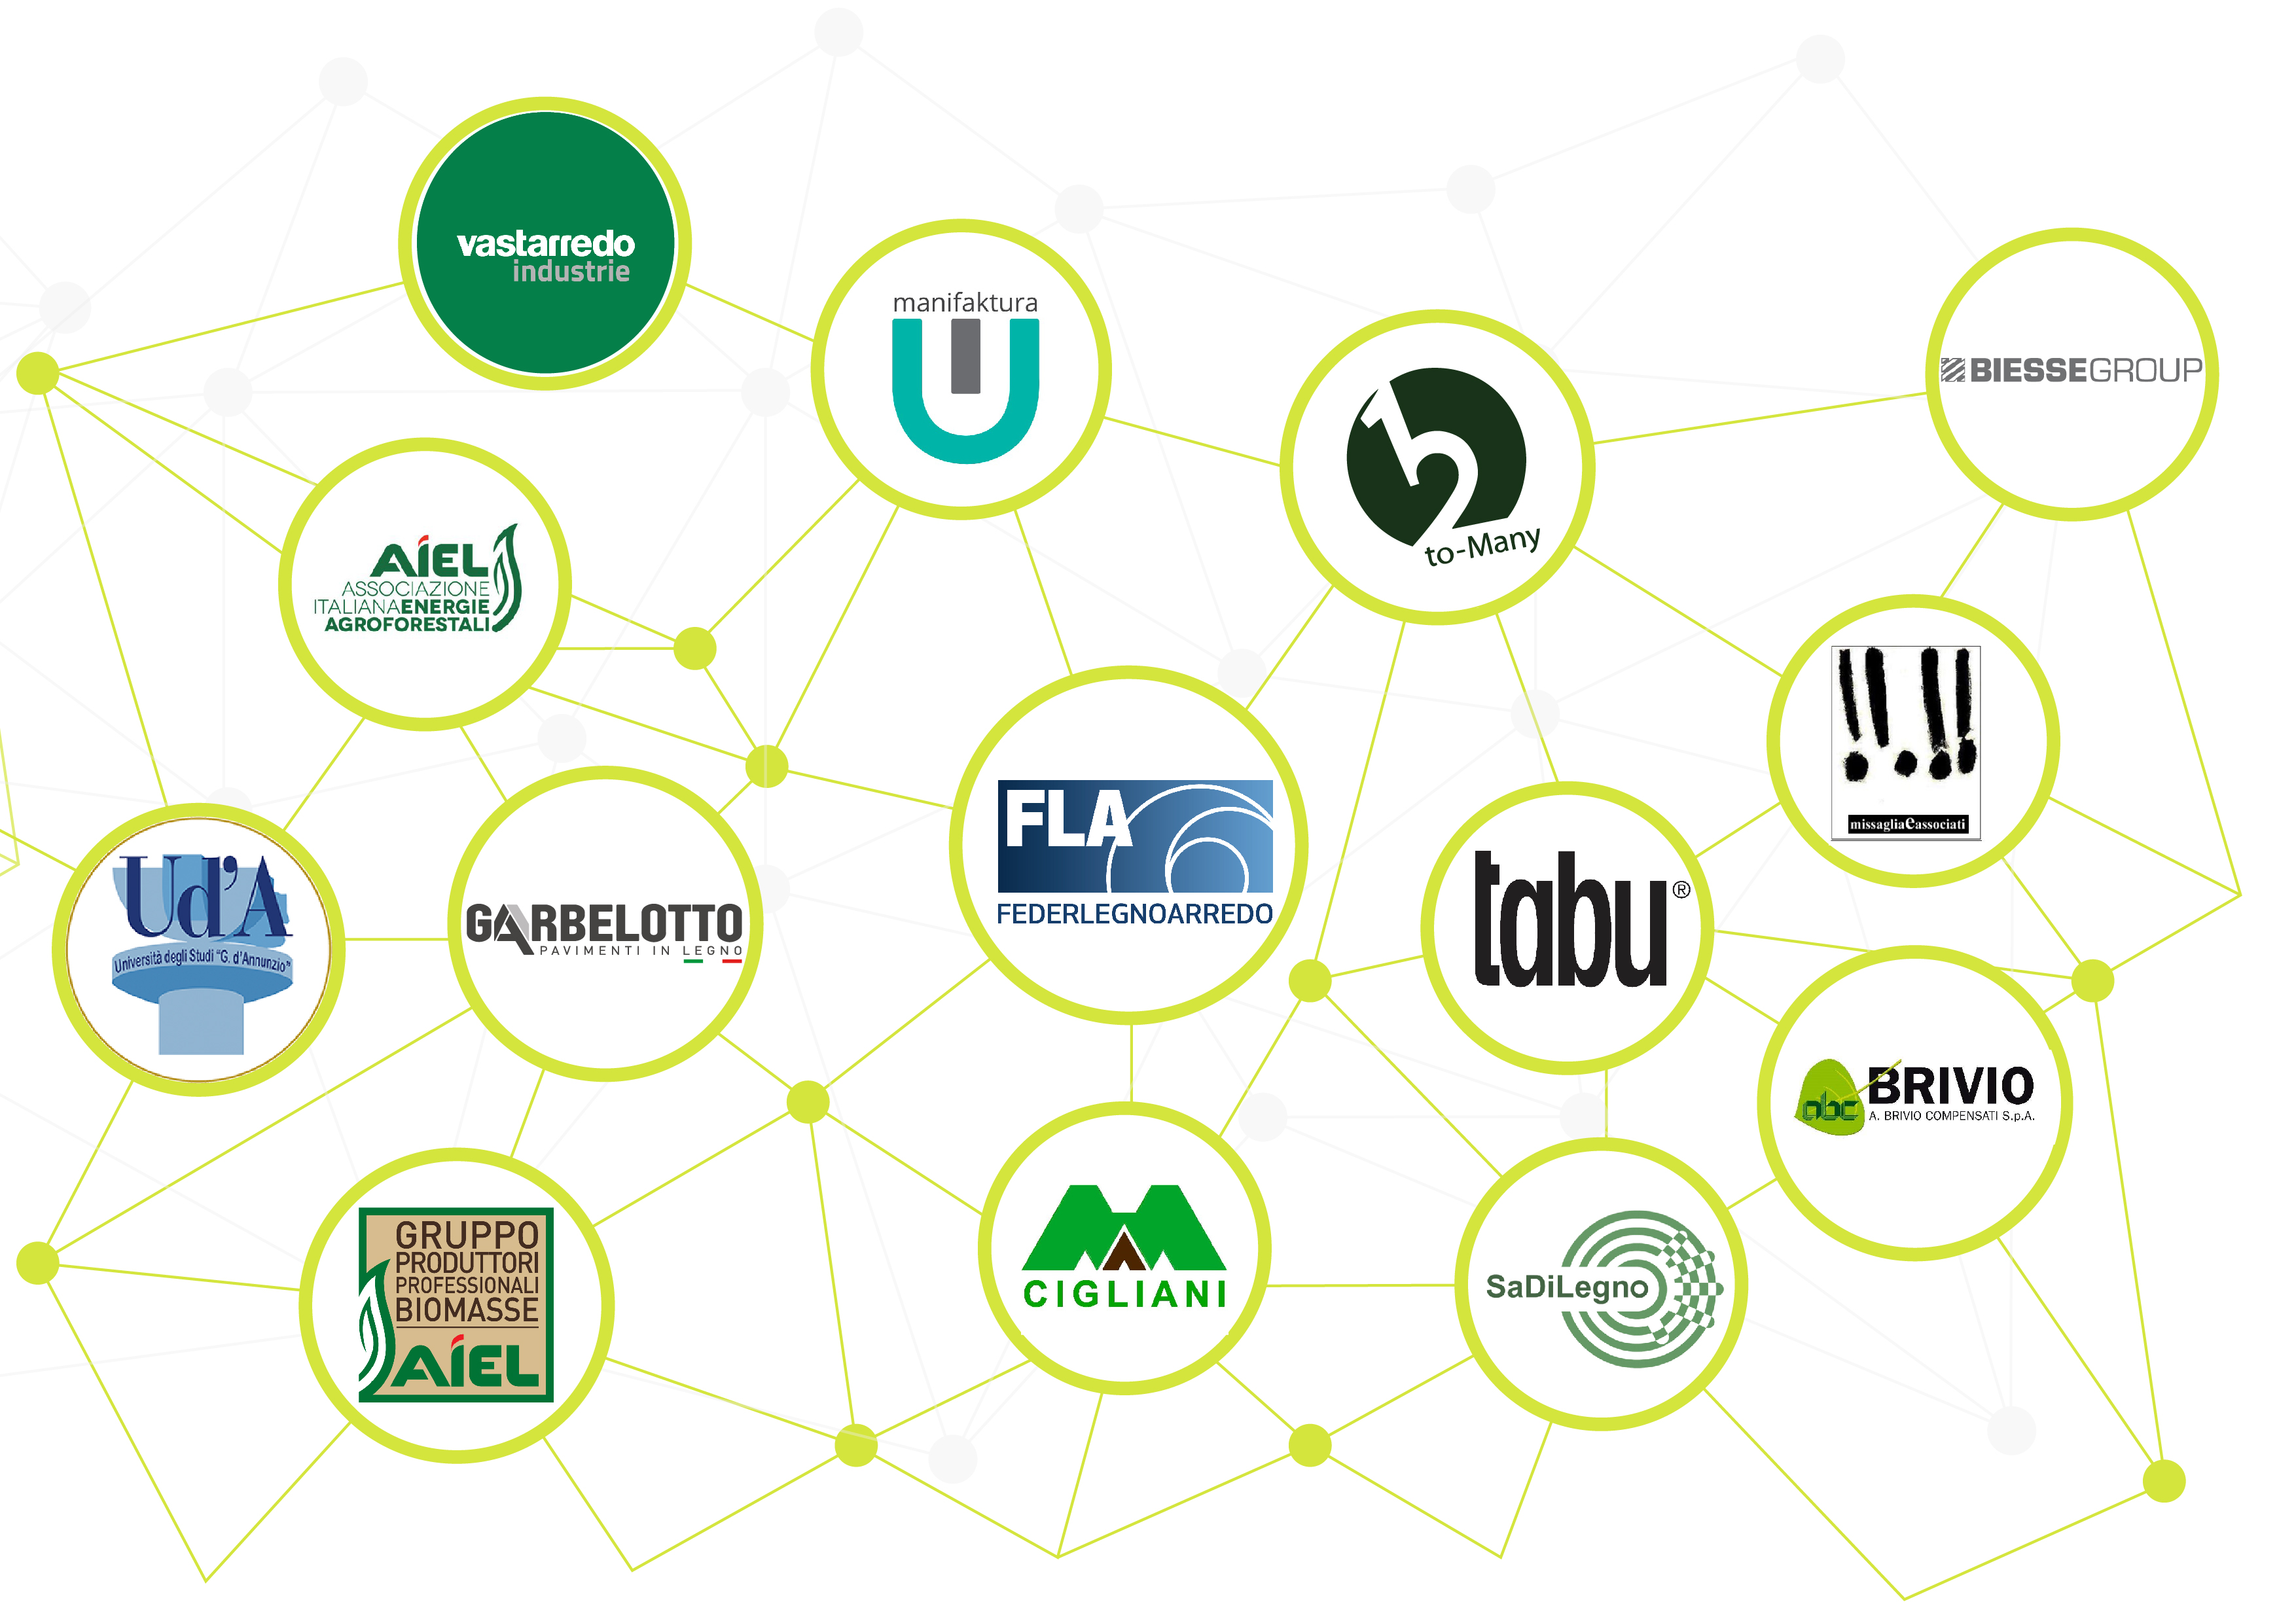 partner: Associazione Italiana Energie Agroforestali, Manifaktura, to-Many, Missaglia e associati, Gruppo Produttori professionali biomasse, Cigliani, SaDiLefno